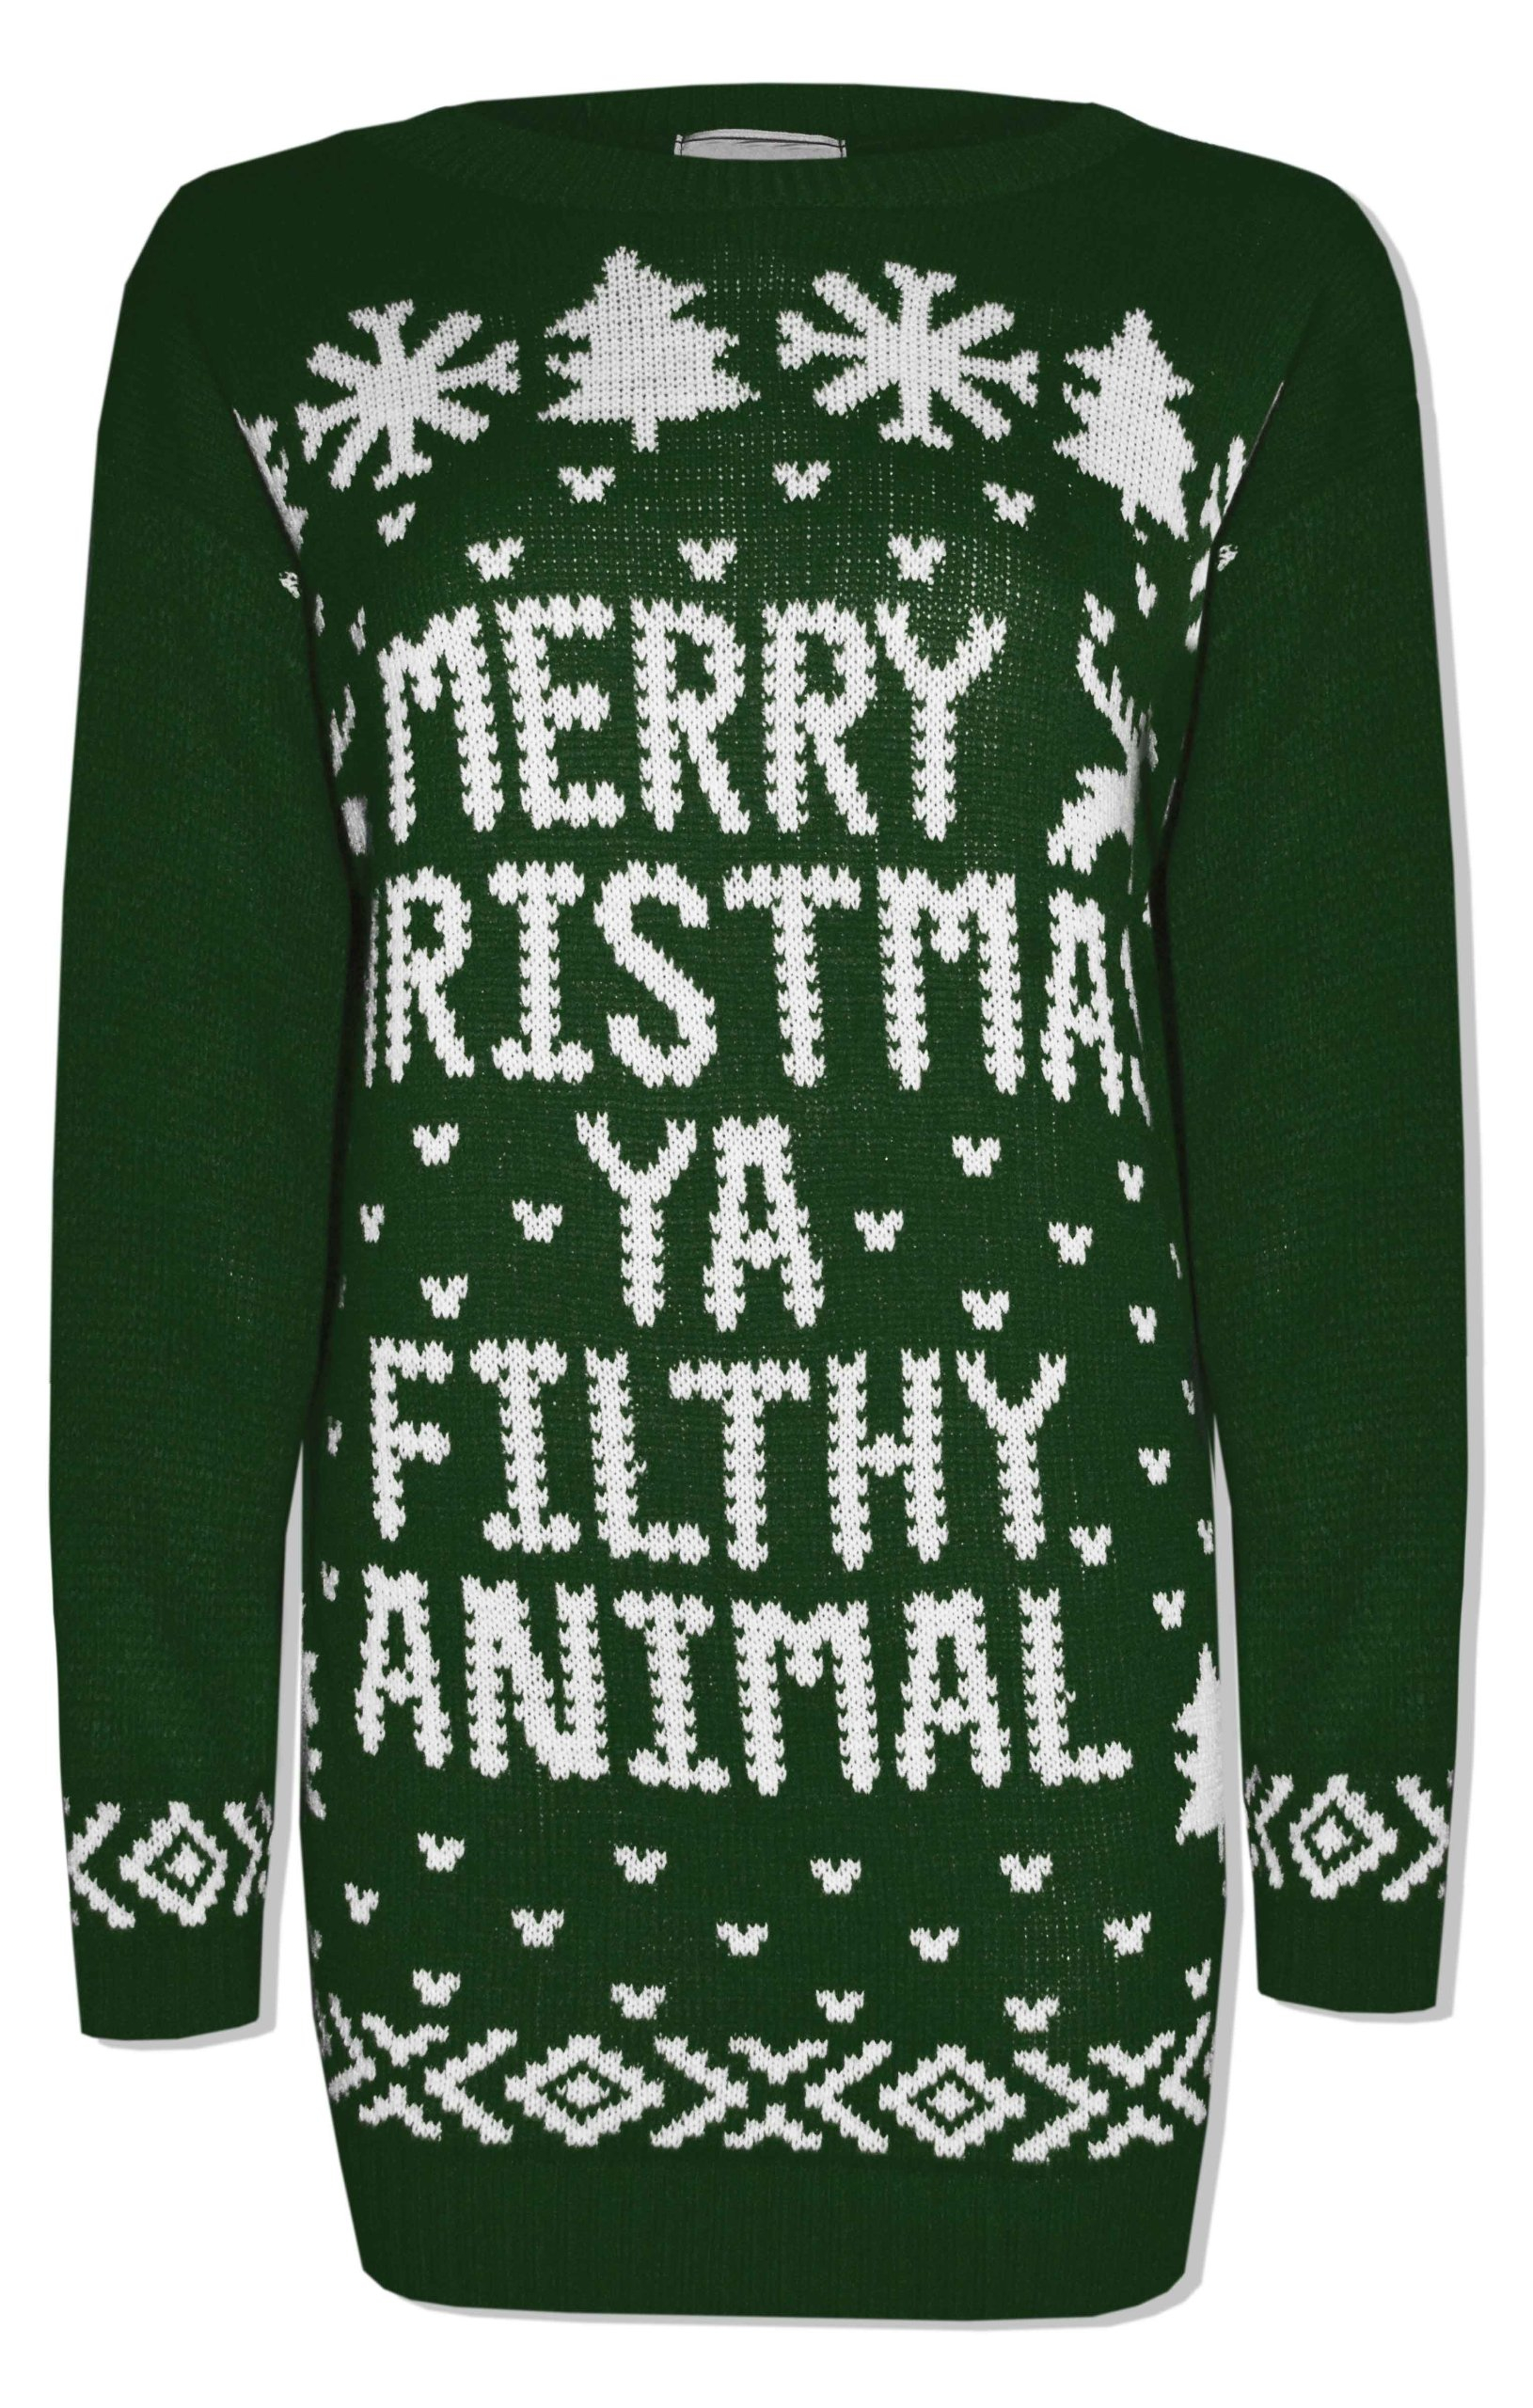 Retro Christmas Jumper Knitting Patterns Blush Avenue Mens Ladies Merry Christmas Ya Filthy Animal Novelty Retro Xmas Home Top Jumper